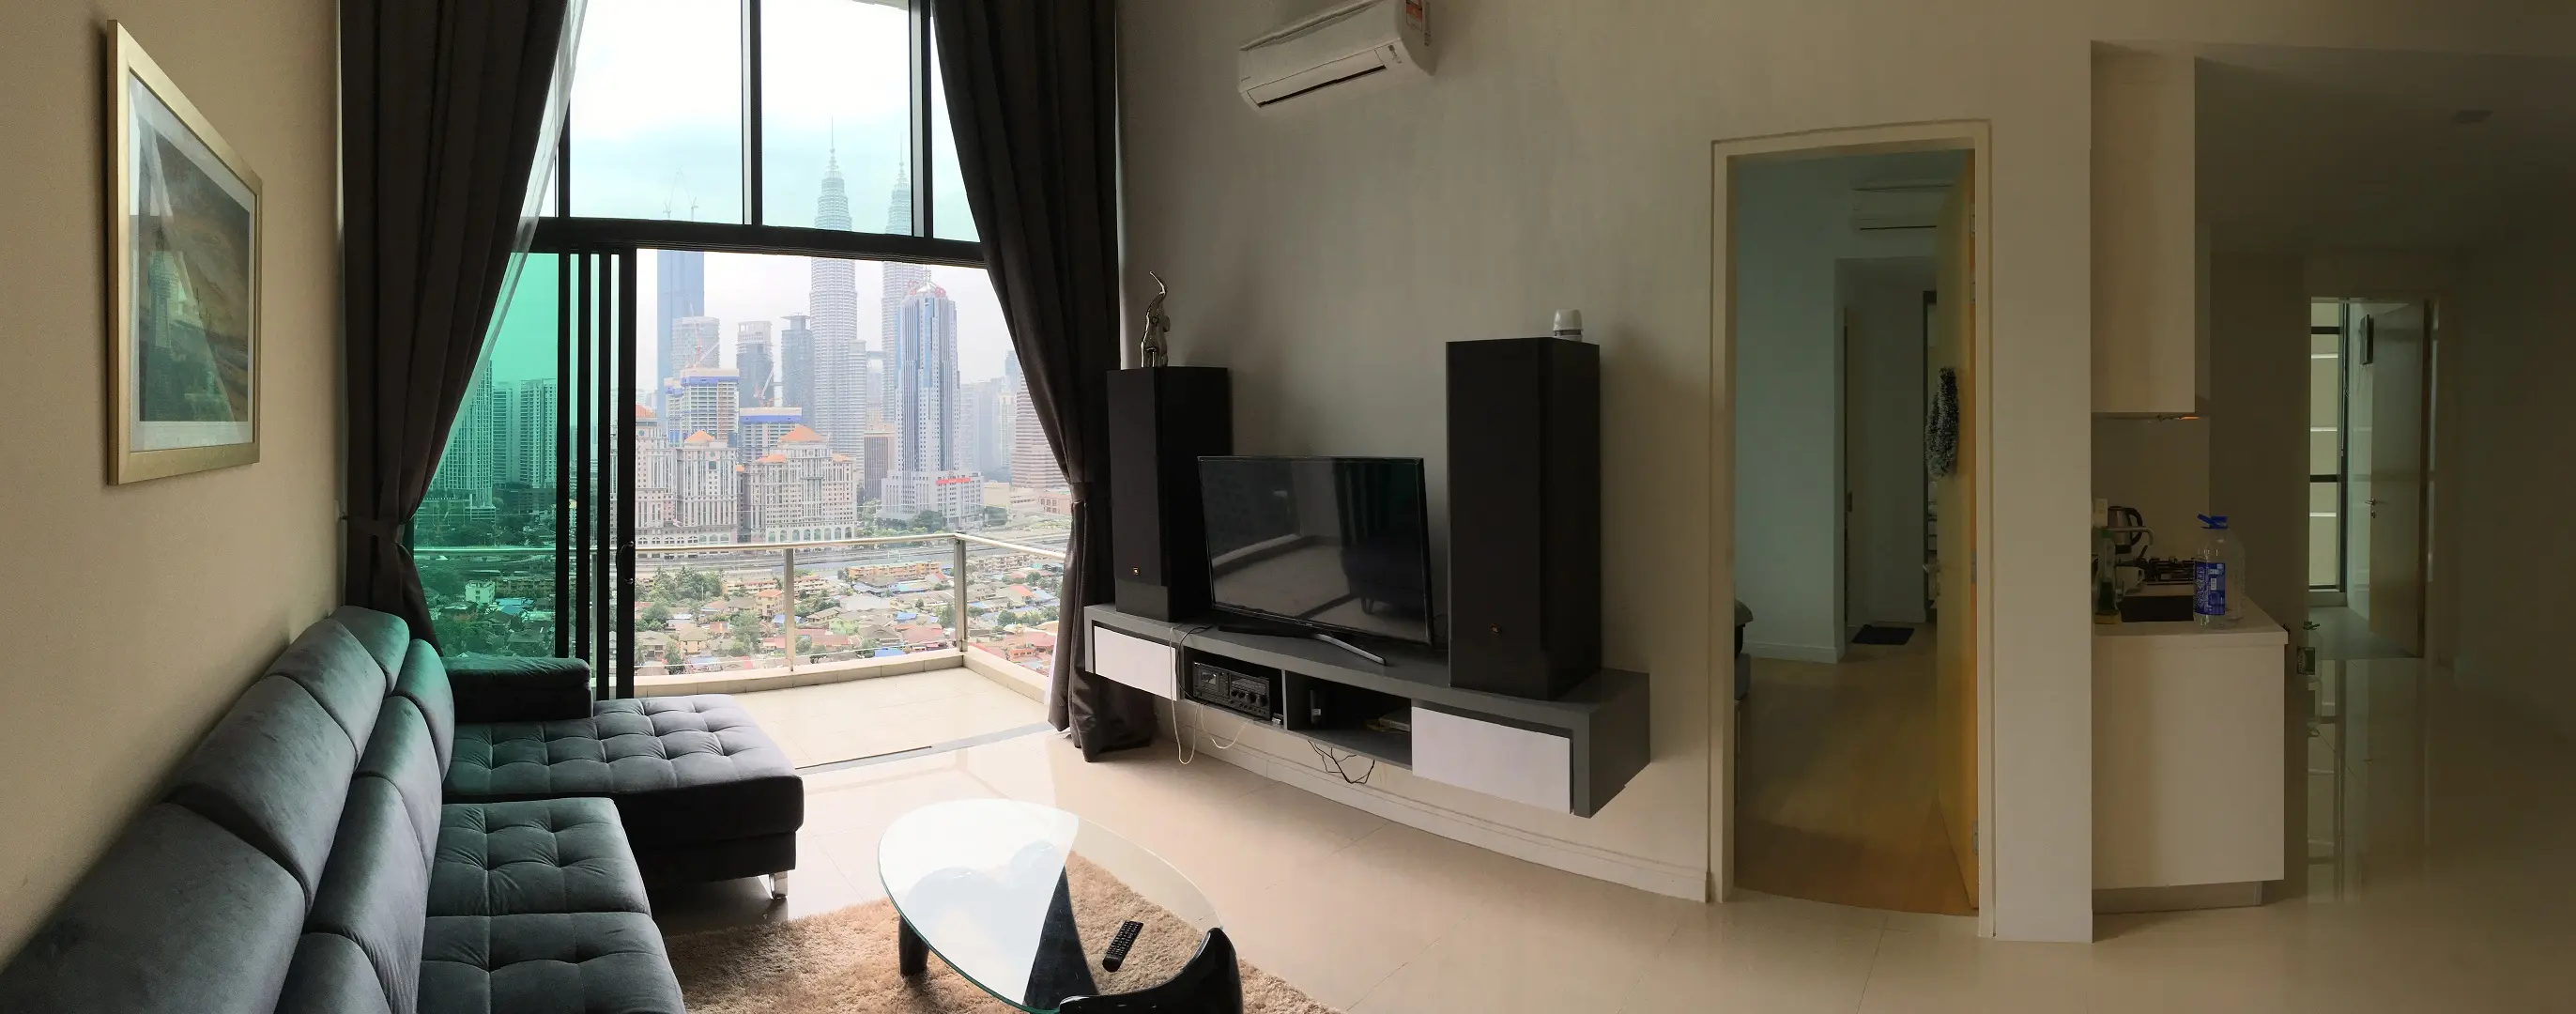 Kuala Lumpur szállás airbnb Setia Sky panoráma Petronas tornyok